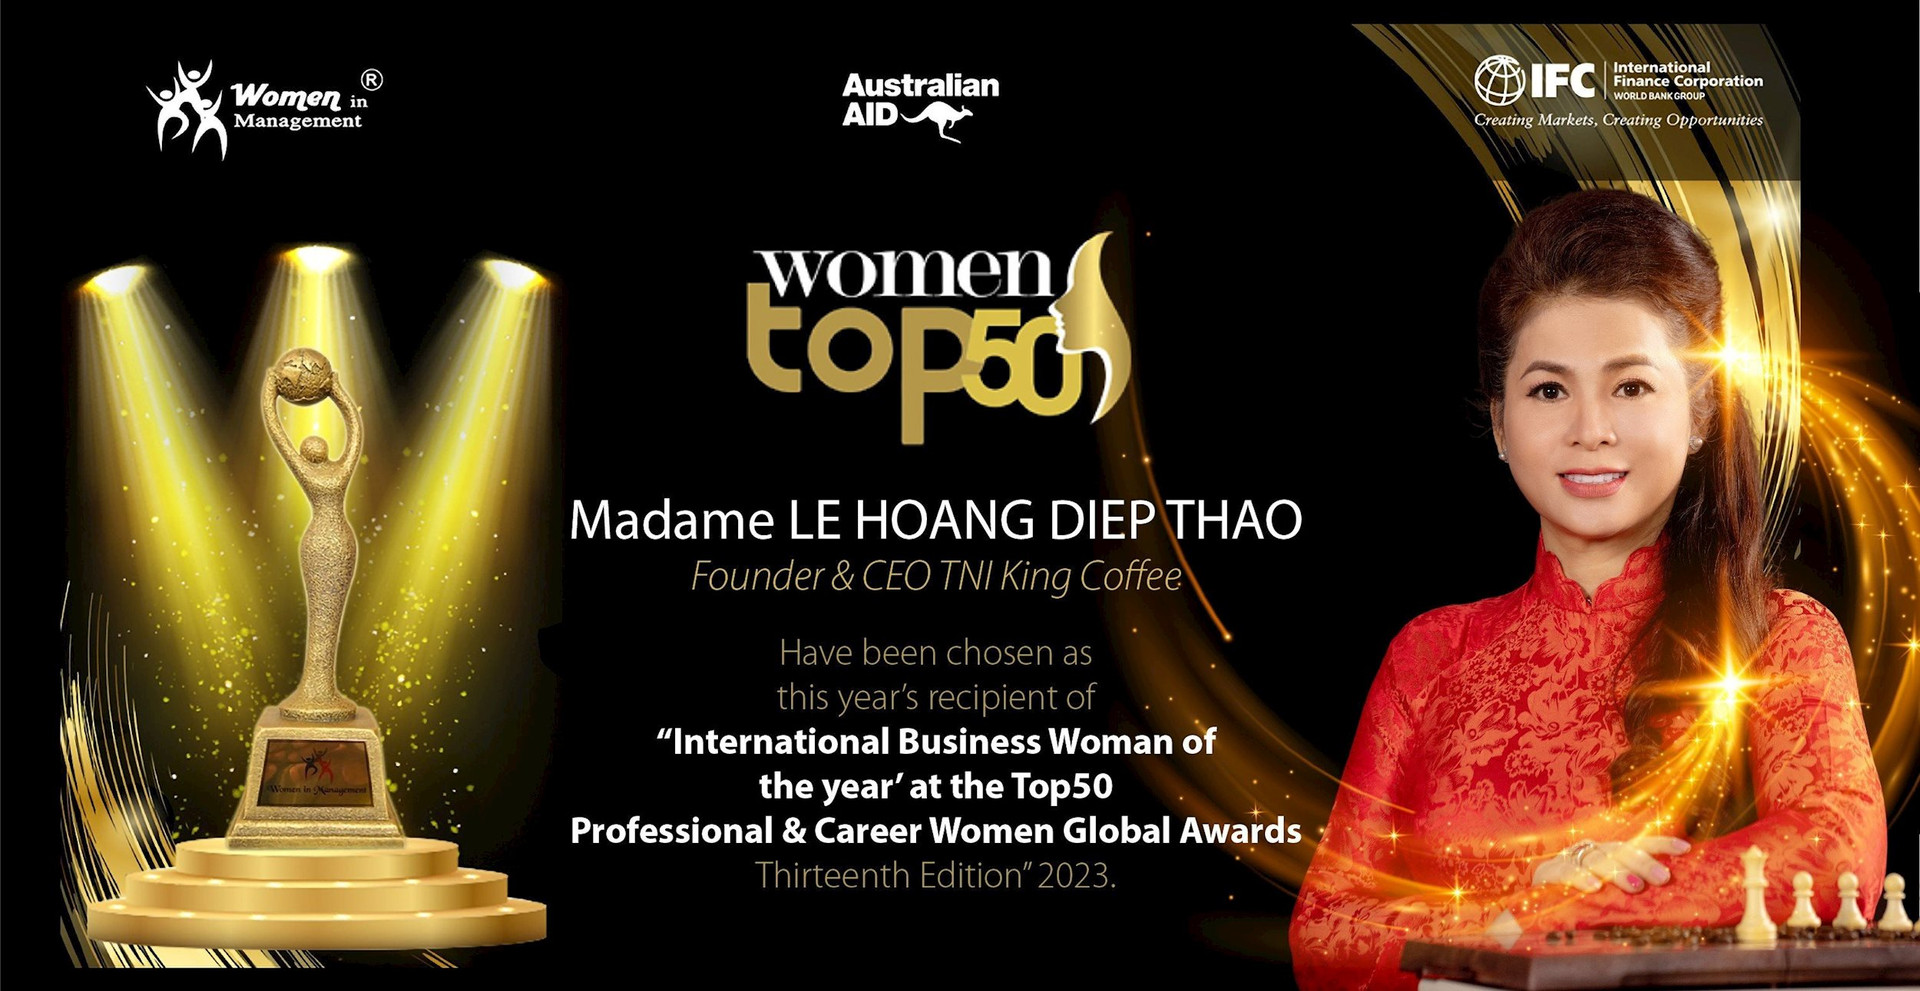 top50-professional-career-women-global-awards-2023-2-.jpg